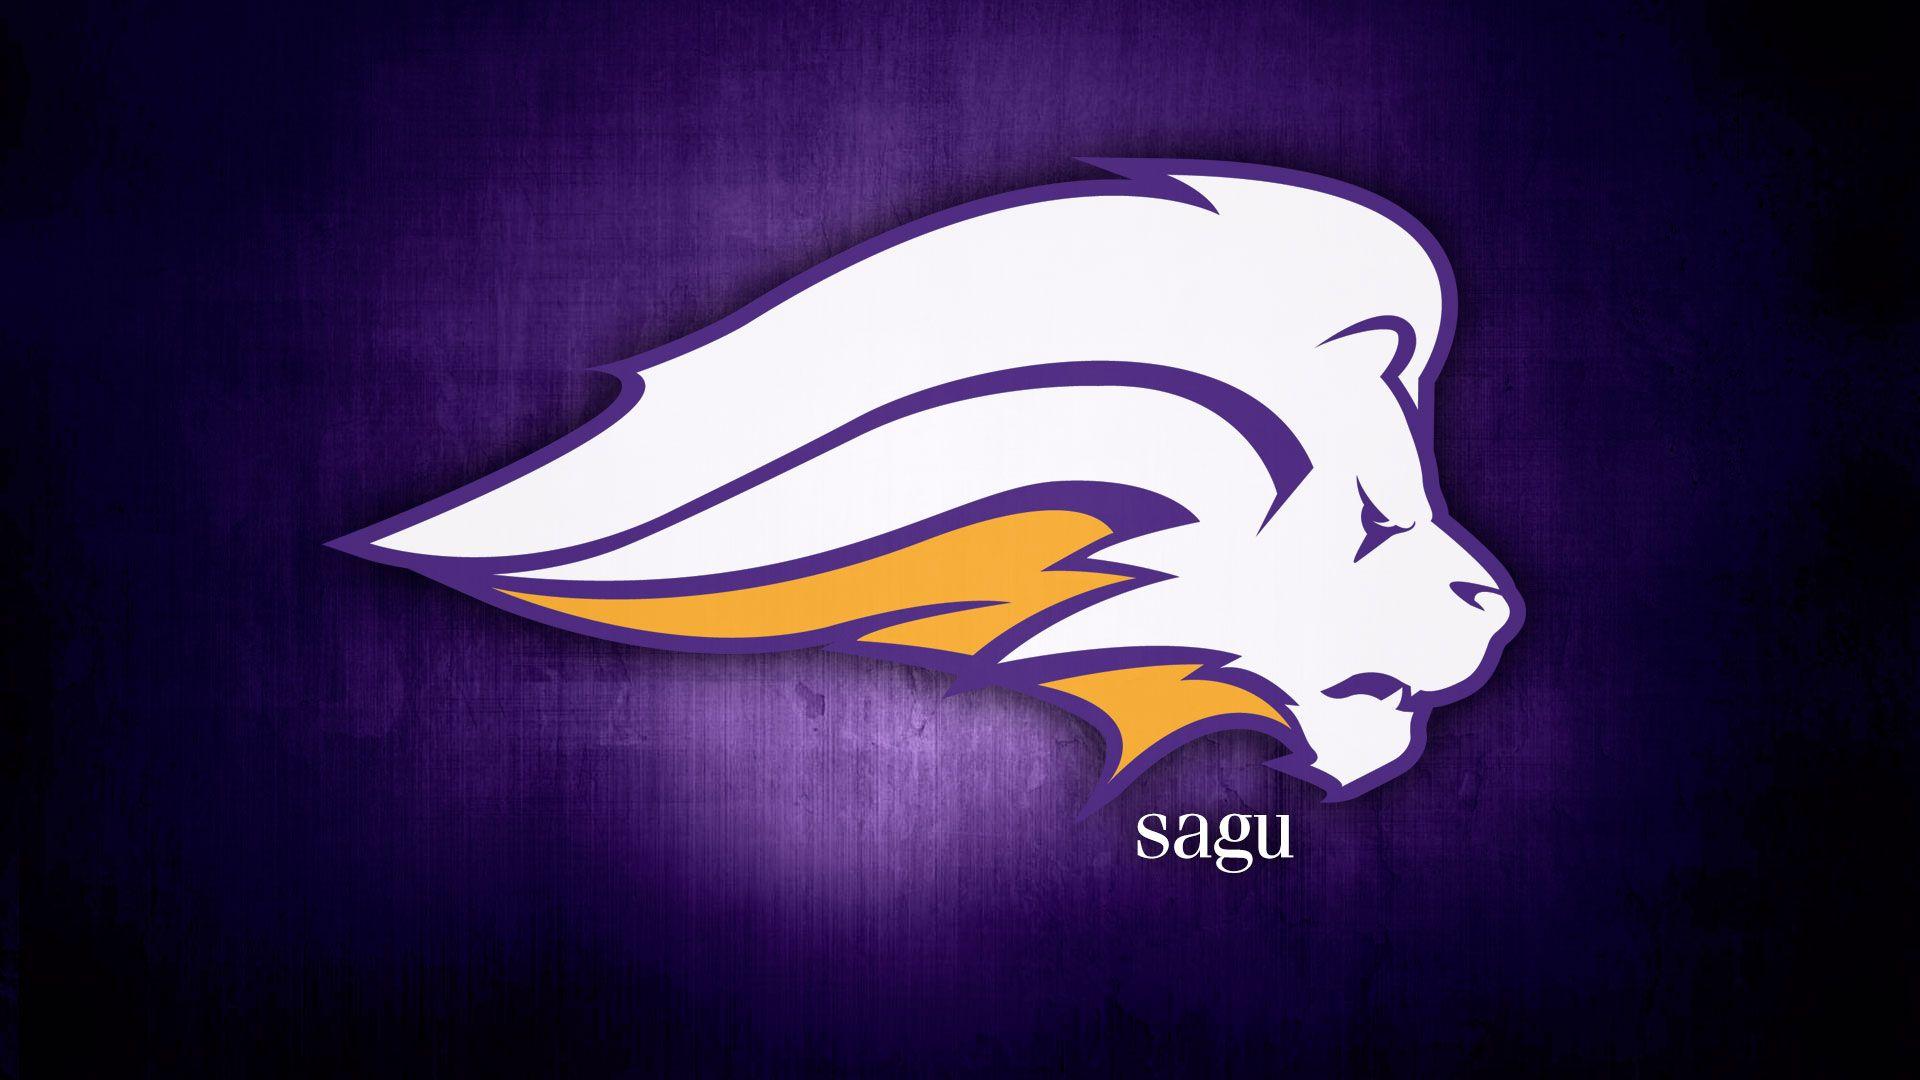 SAGU unveils new athletic logo